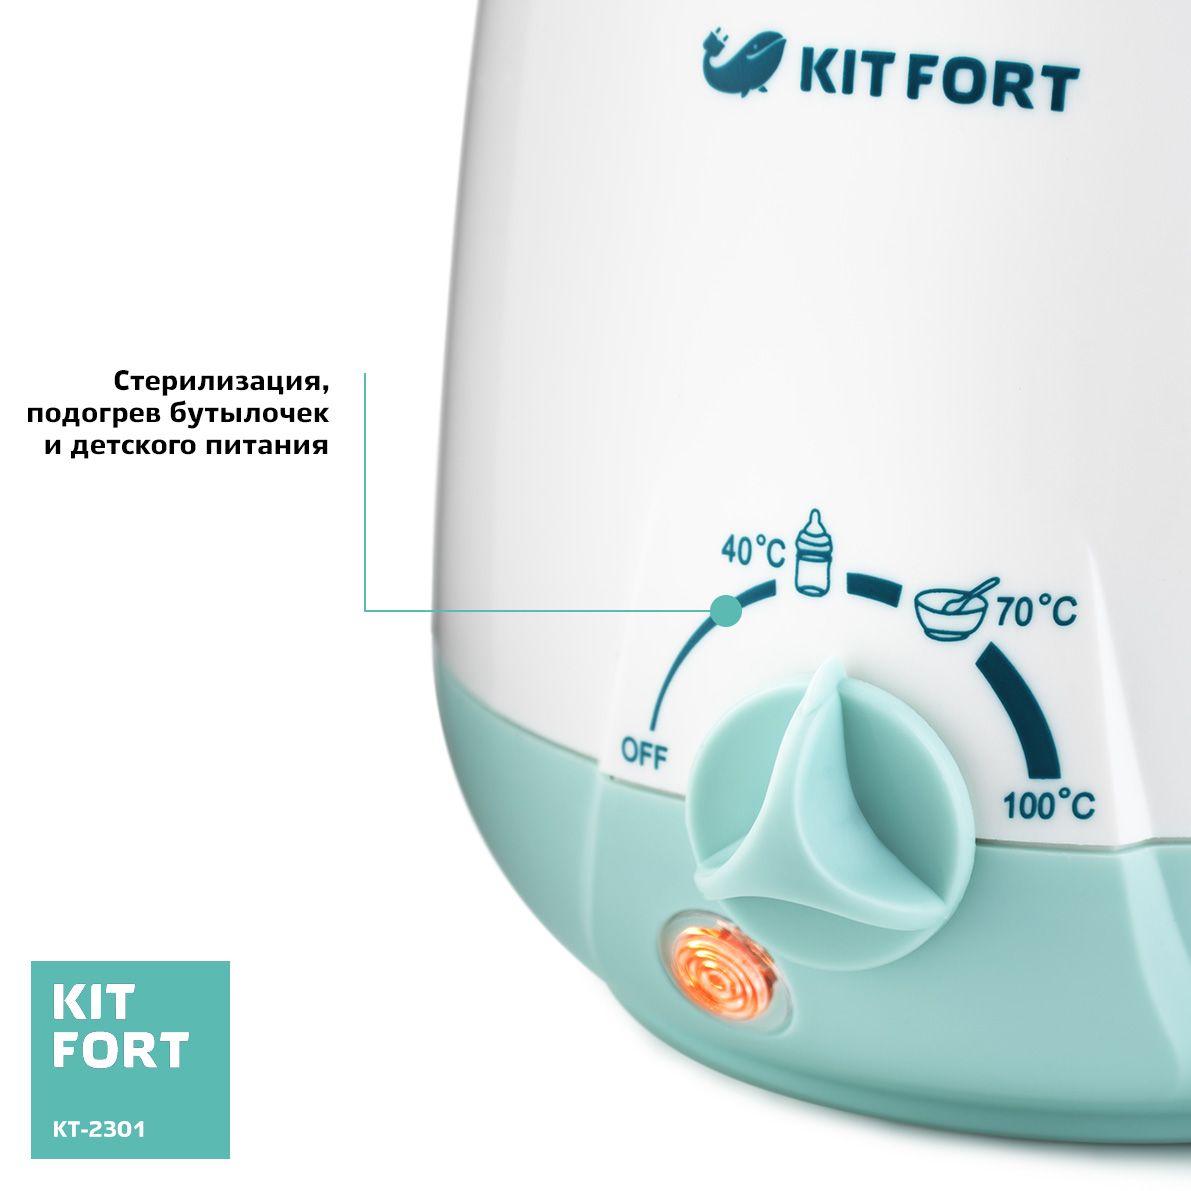 Kitfort   -2301